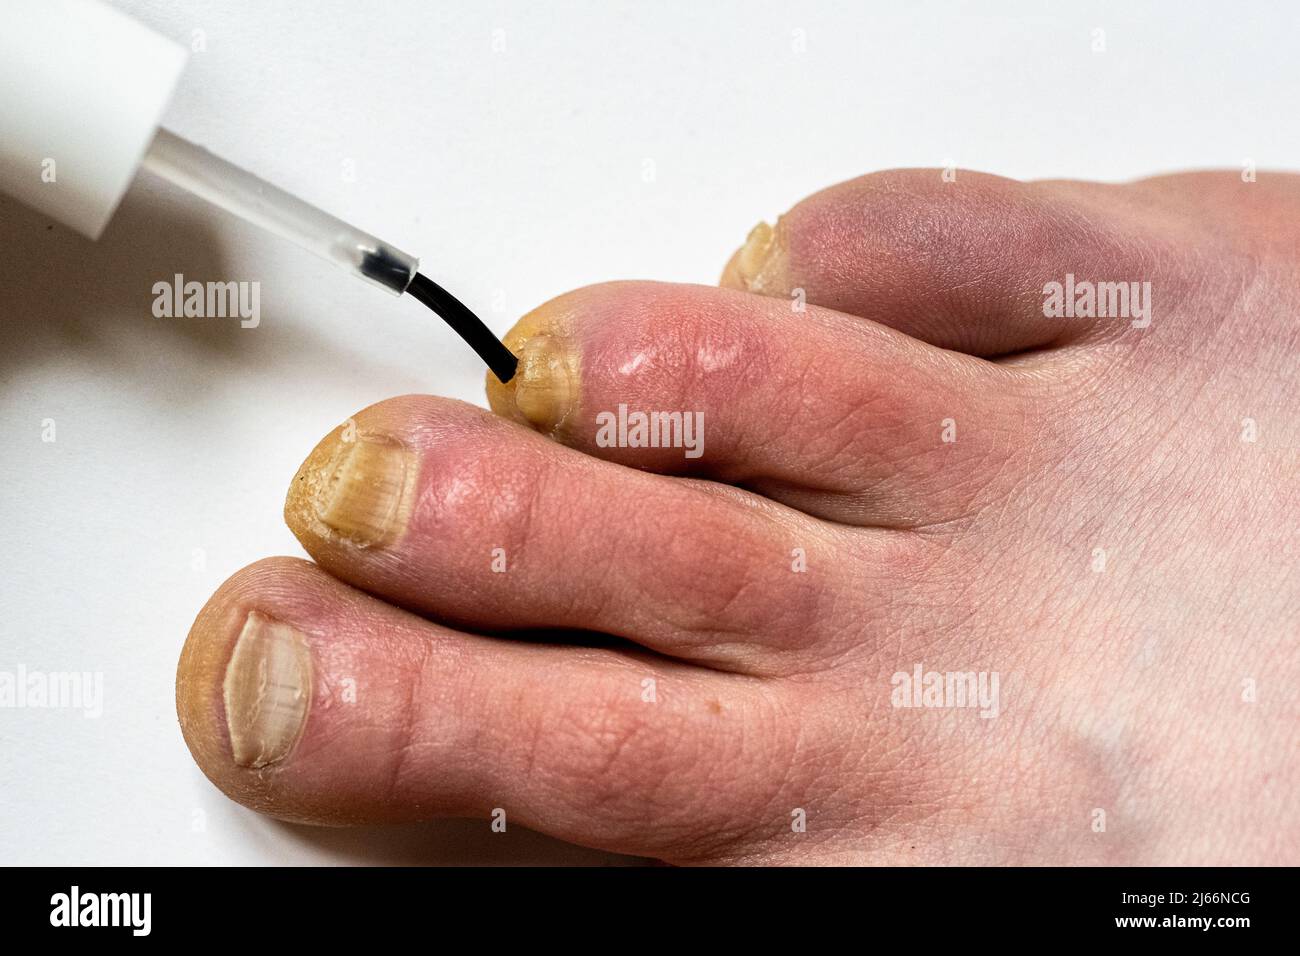 using a varnish against nail fungus nail fungal infection treatment 2J66NCG